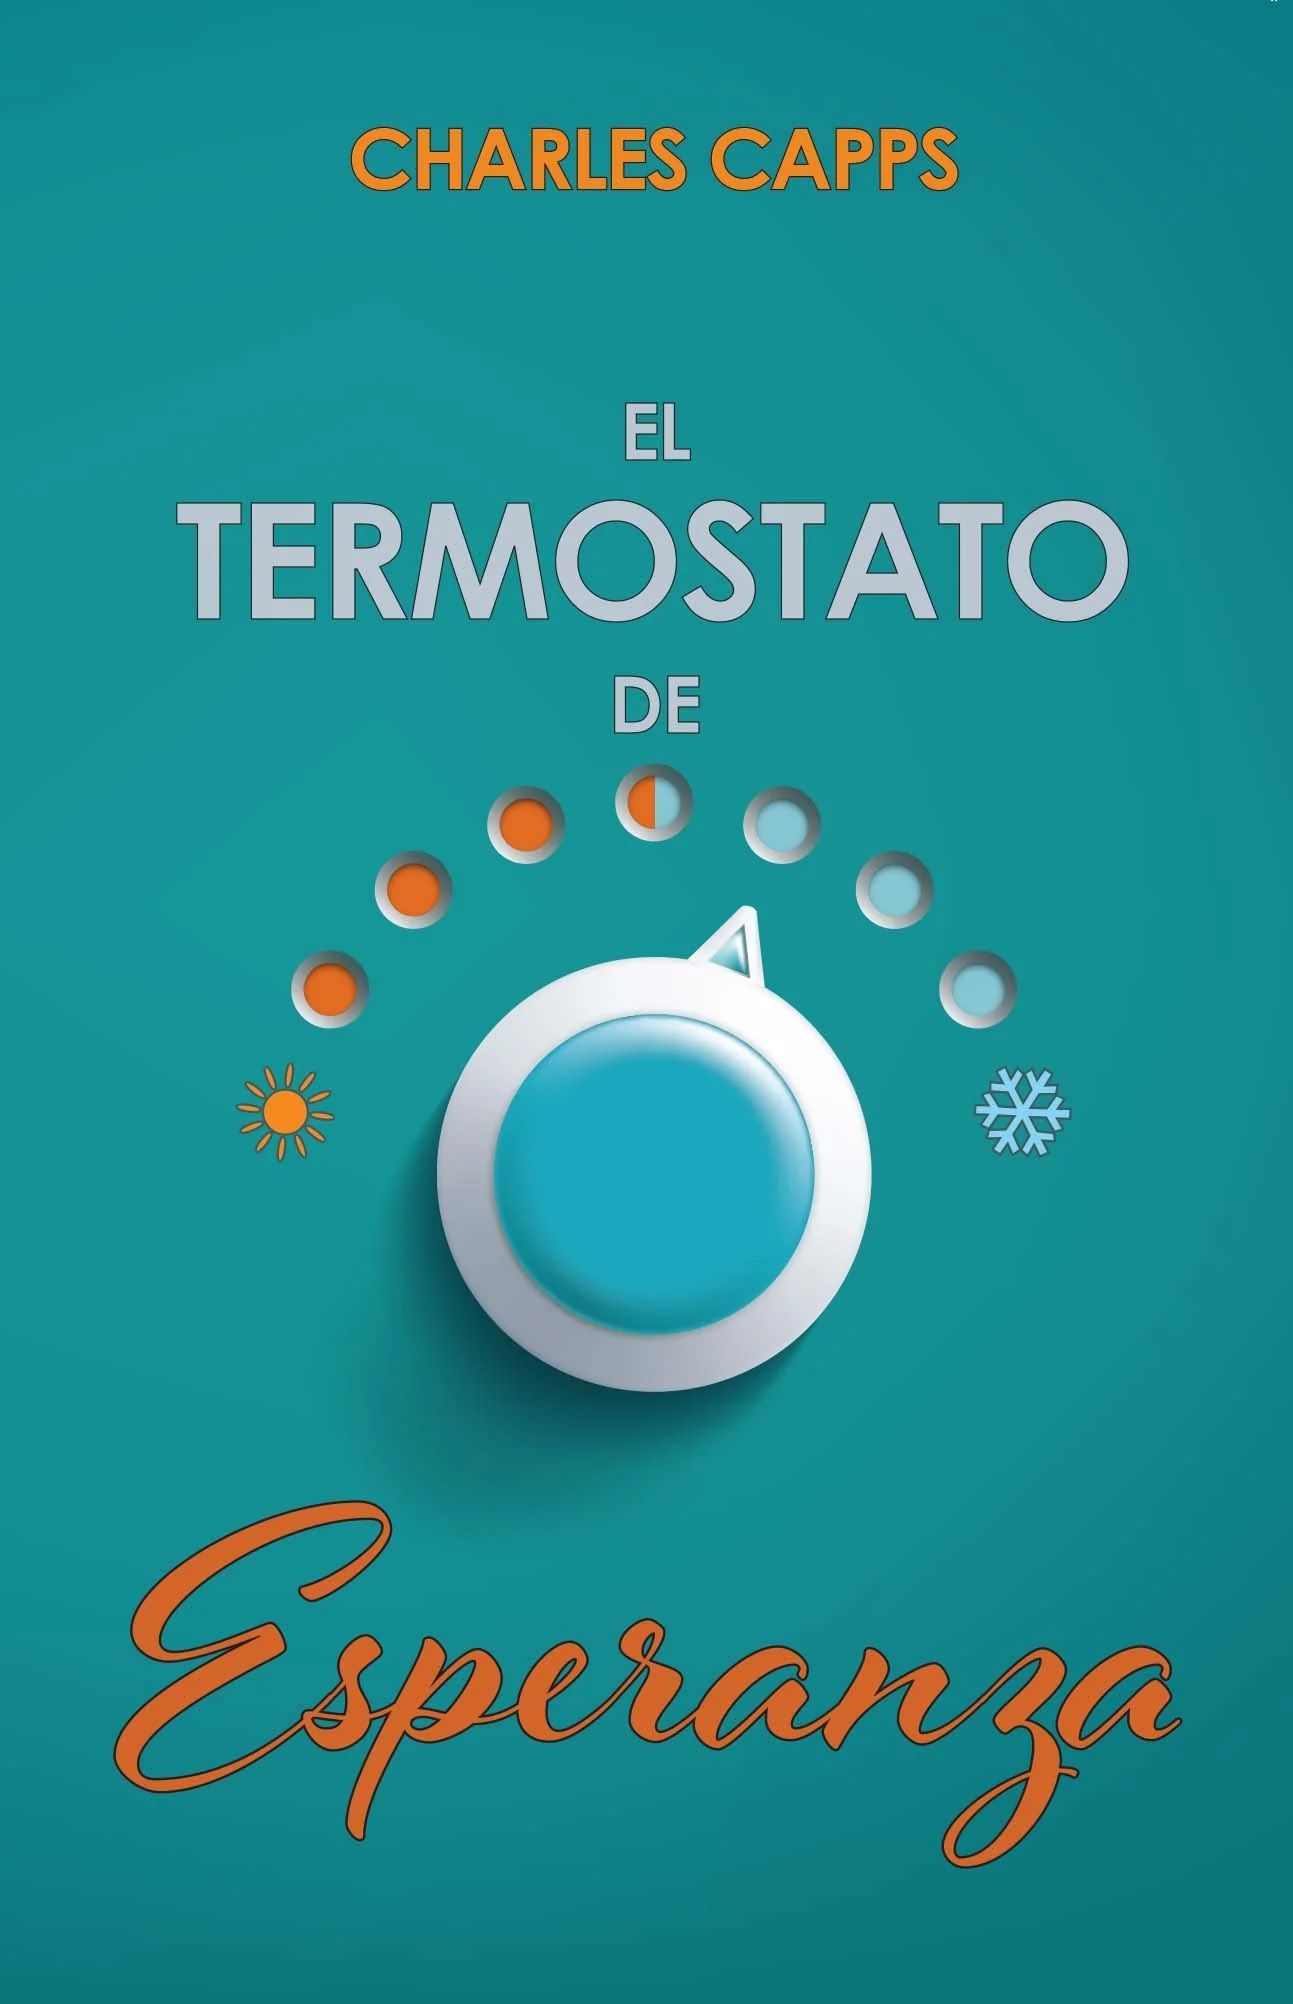 Spanisch - Charles Capps: El Termostato de Esperanza (The Thermostat of Hope)